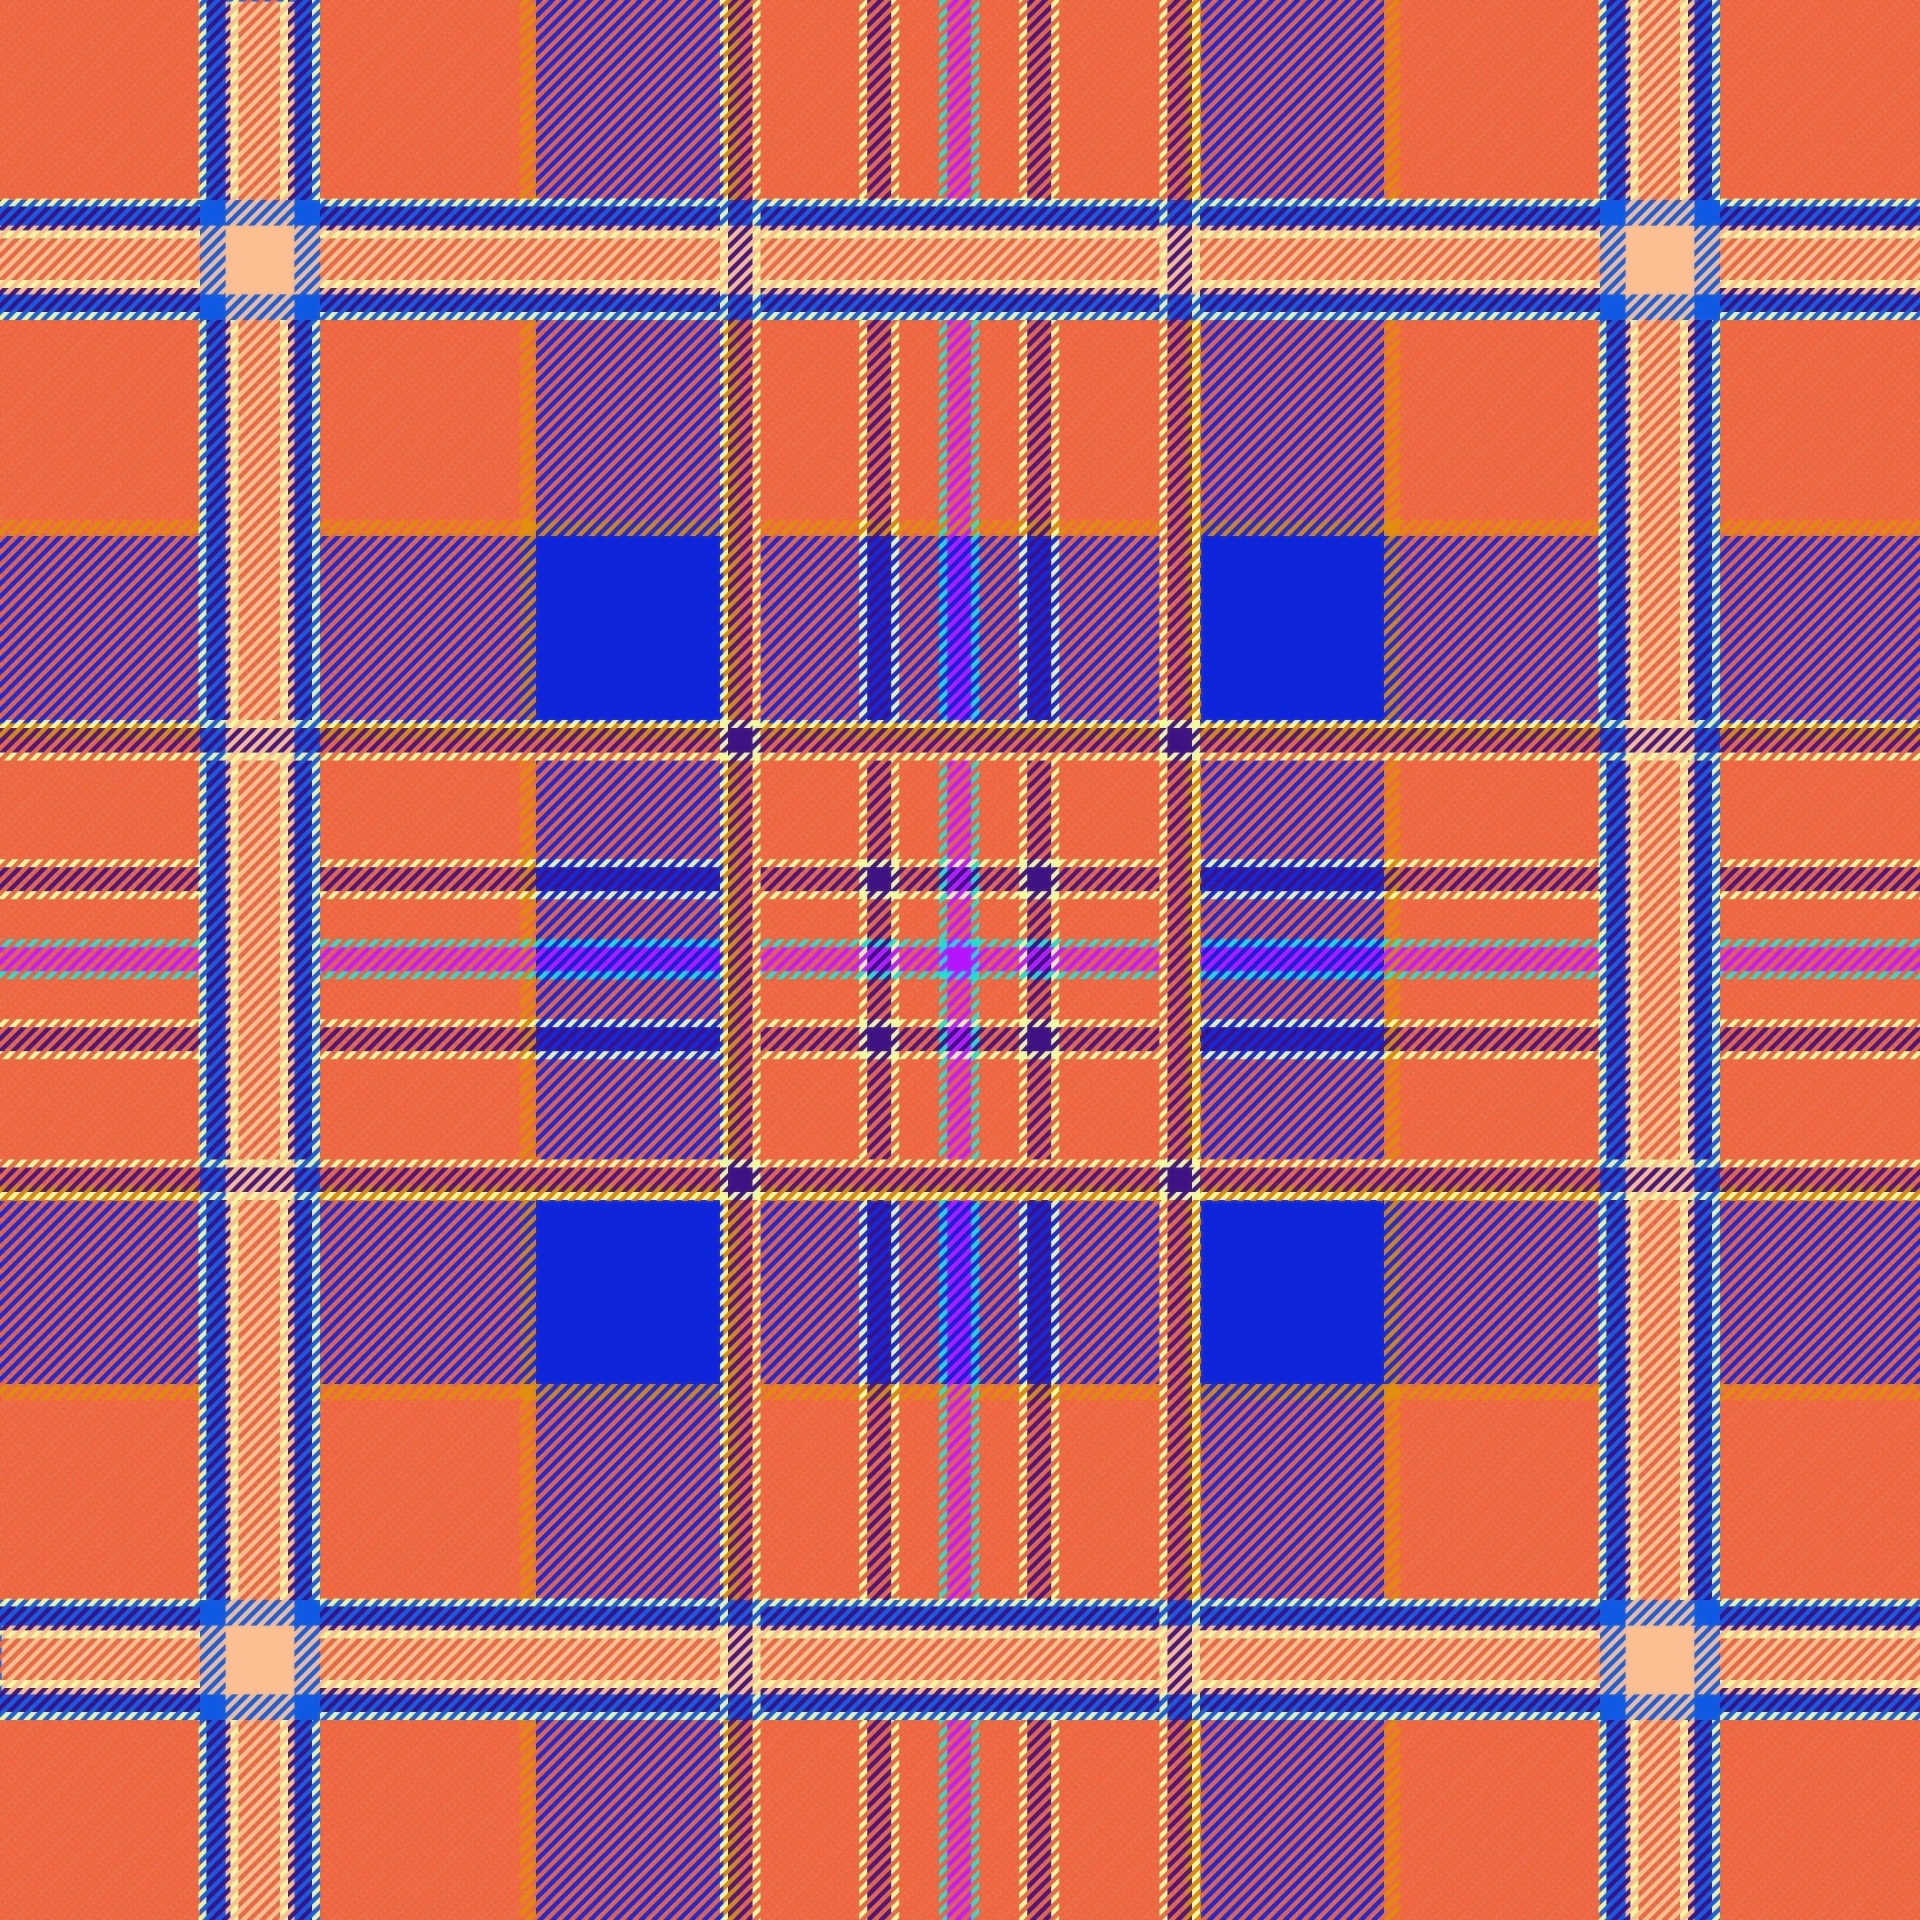 Plaid Checkered Pattern Background Free Stock Photo - Public Domain ...